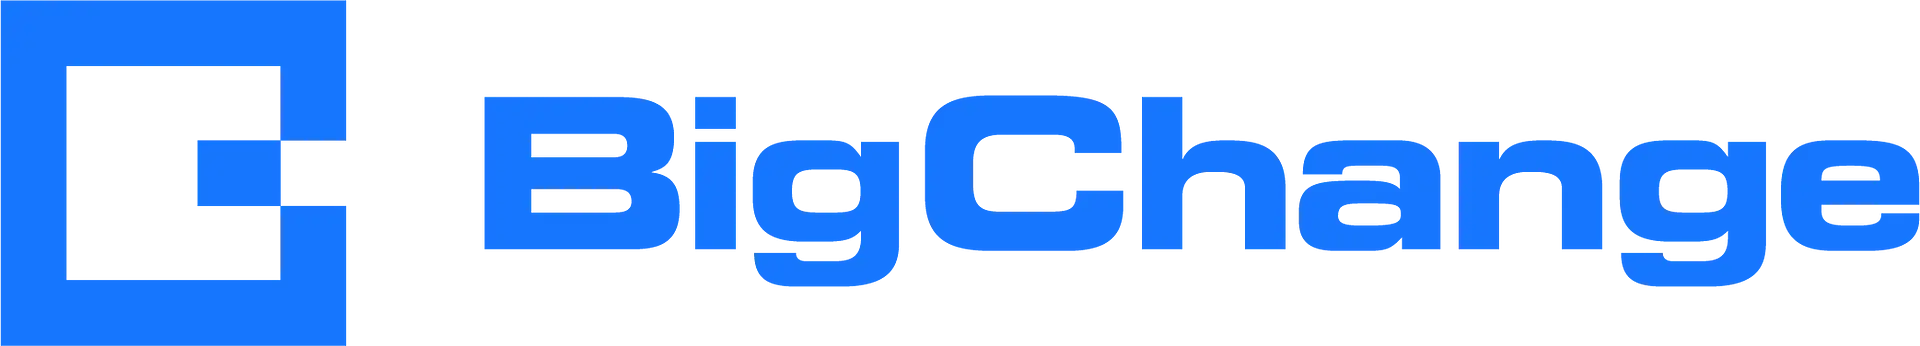 BigChange Logo